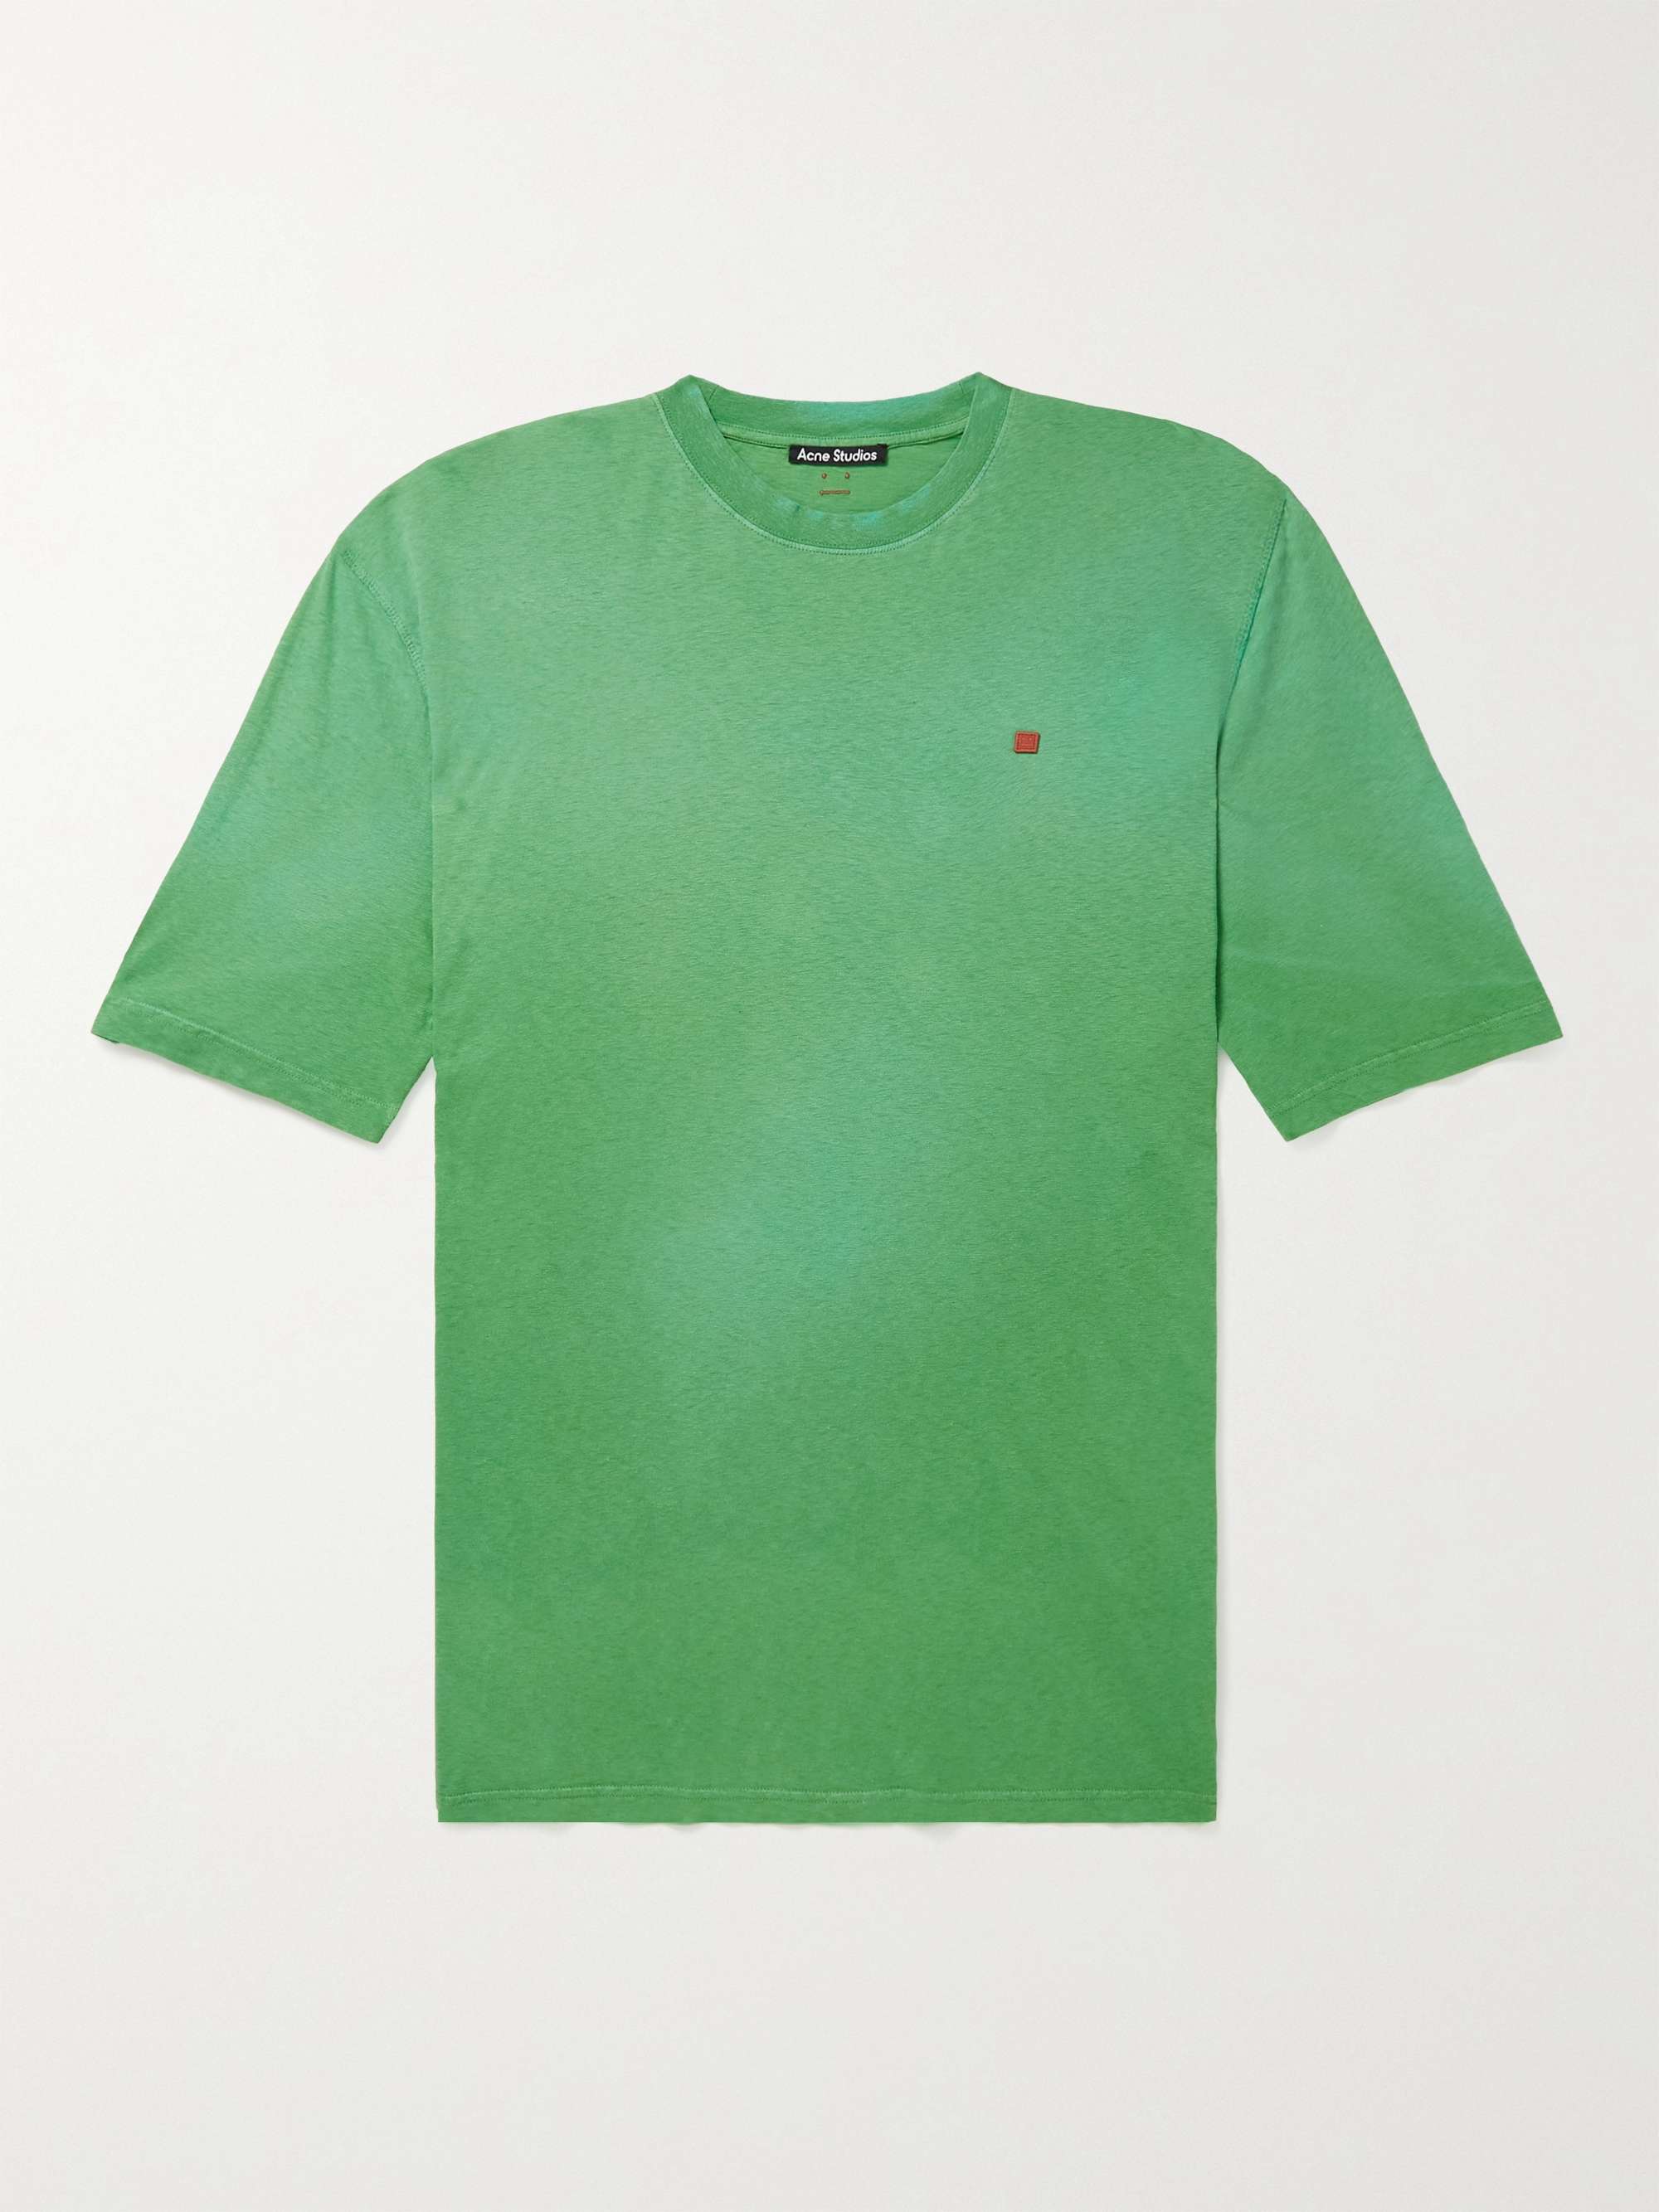 ACNE STUDIOS Eyck Oversized Logo-Appliquéd Cotton-Jersey T-Shirt